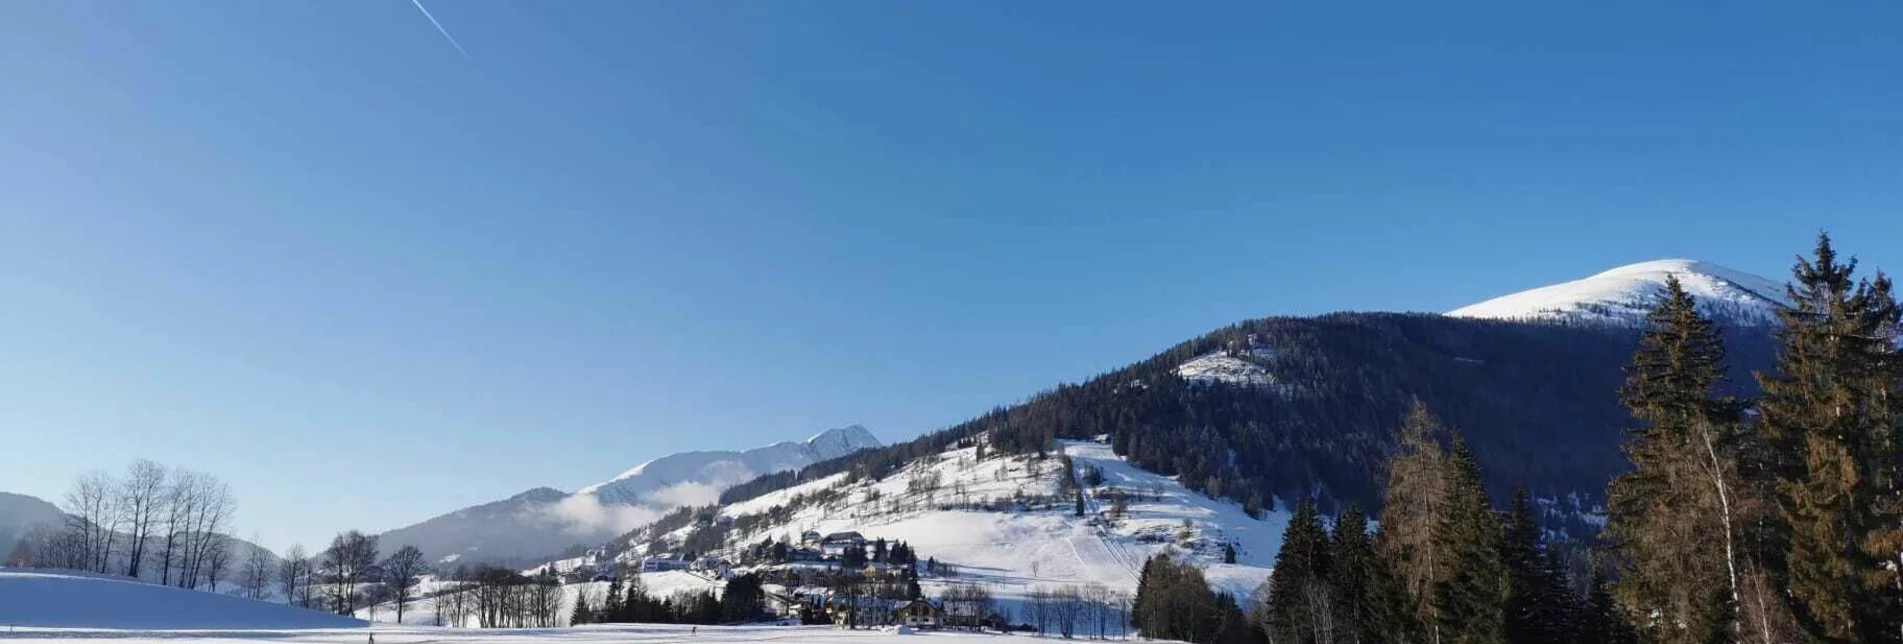 Cross-Country Skiing Sauschneiderboden cross-country ski trail - Touren-Impression #1 | © Tourismusverband Region Murau